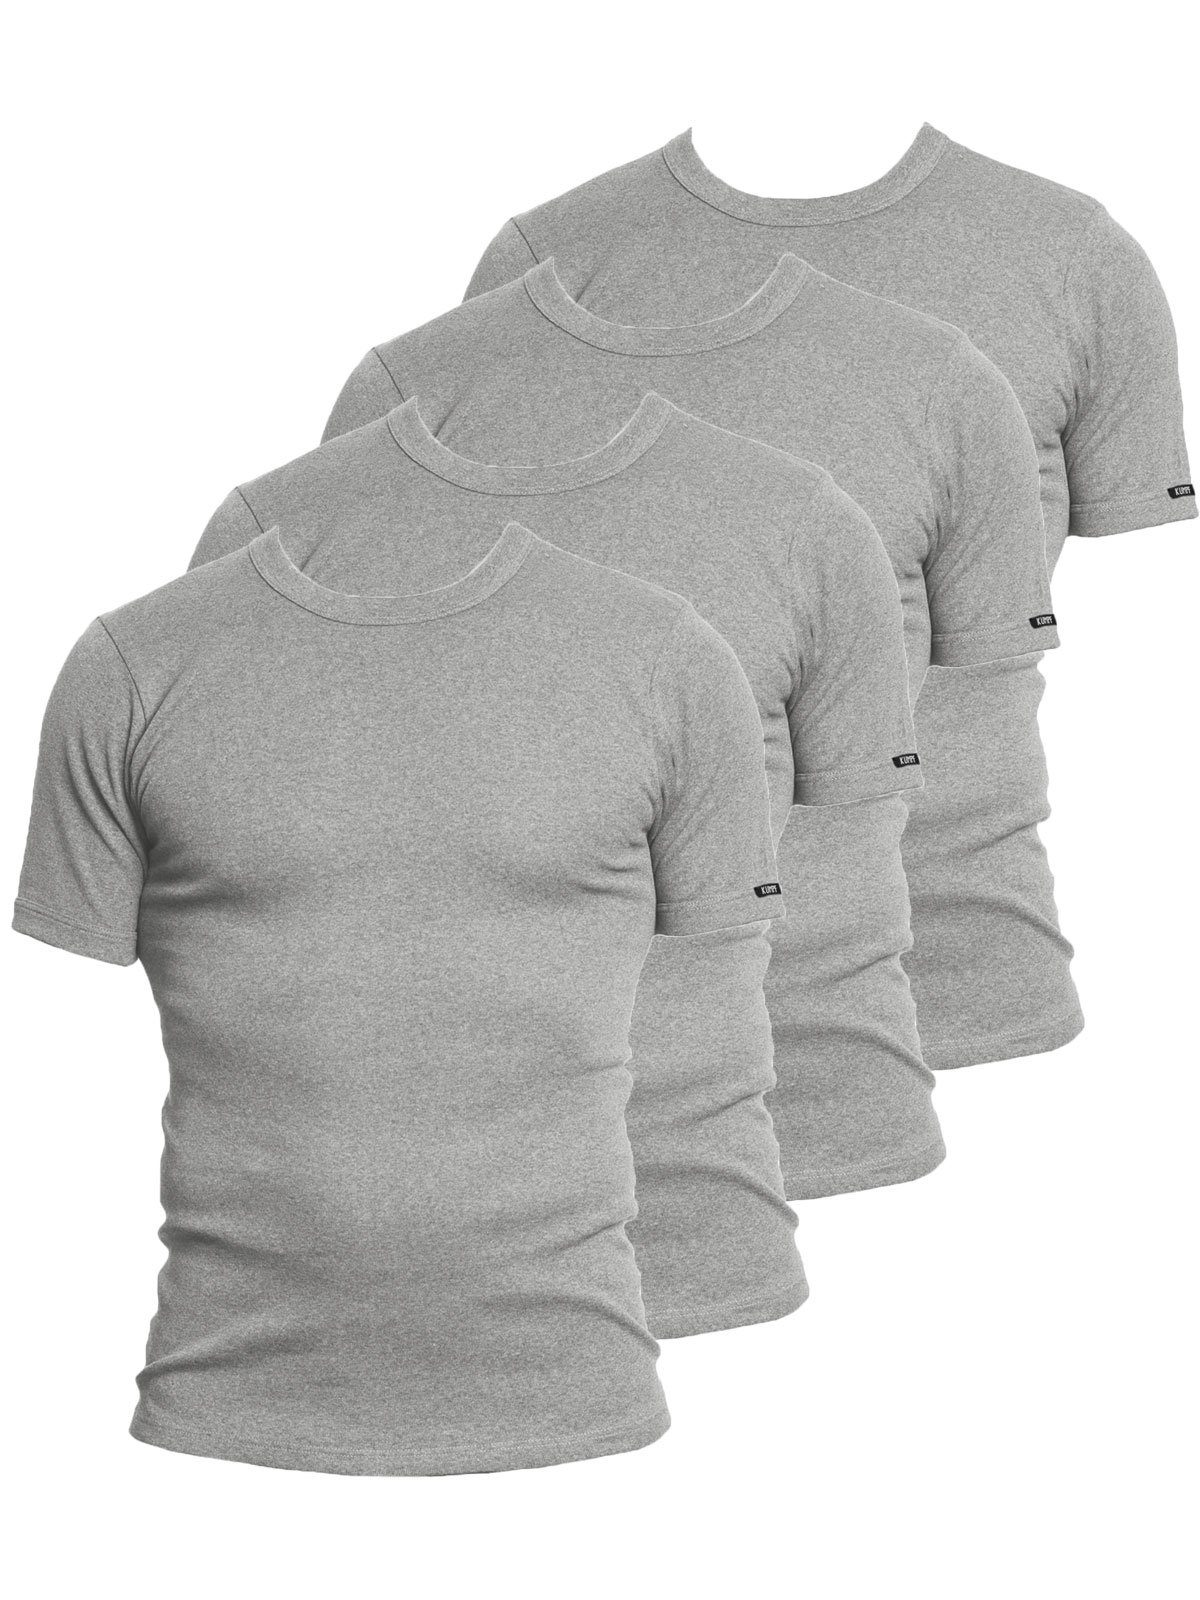 KUMPF Unterziehshirt 4er Sparpack Herren T-Shirt Bio Cotton (Spar-Set, 4-St) hohe Markenqualität stahlgrau-melange